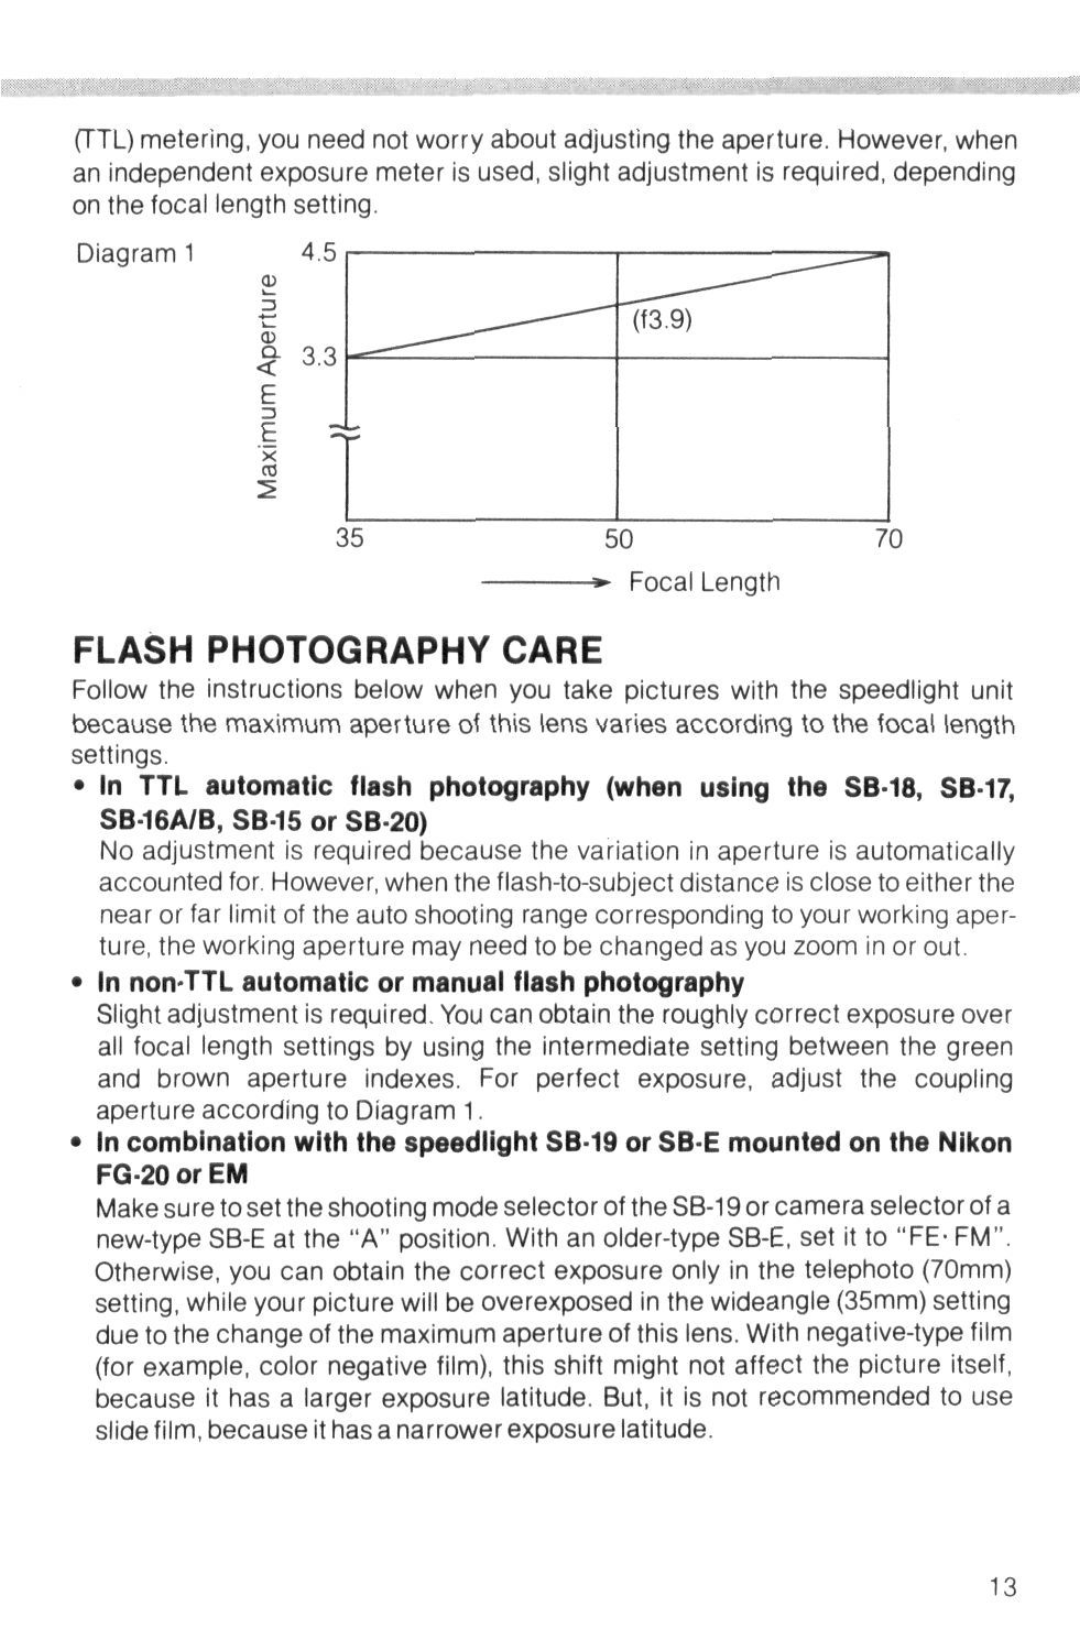 Nikon instruction manual Flash Photography Care, In non-TTL automatic or manual flash photography 